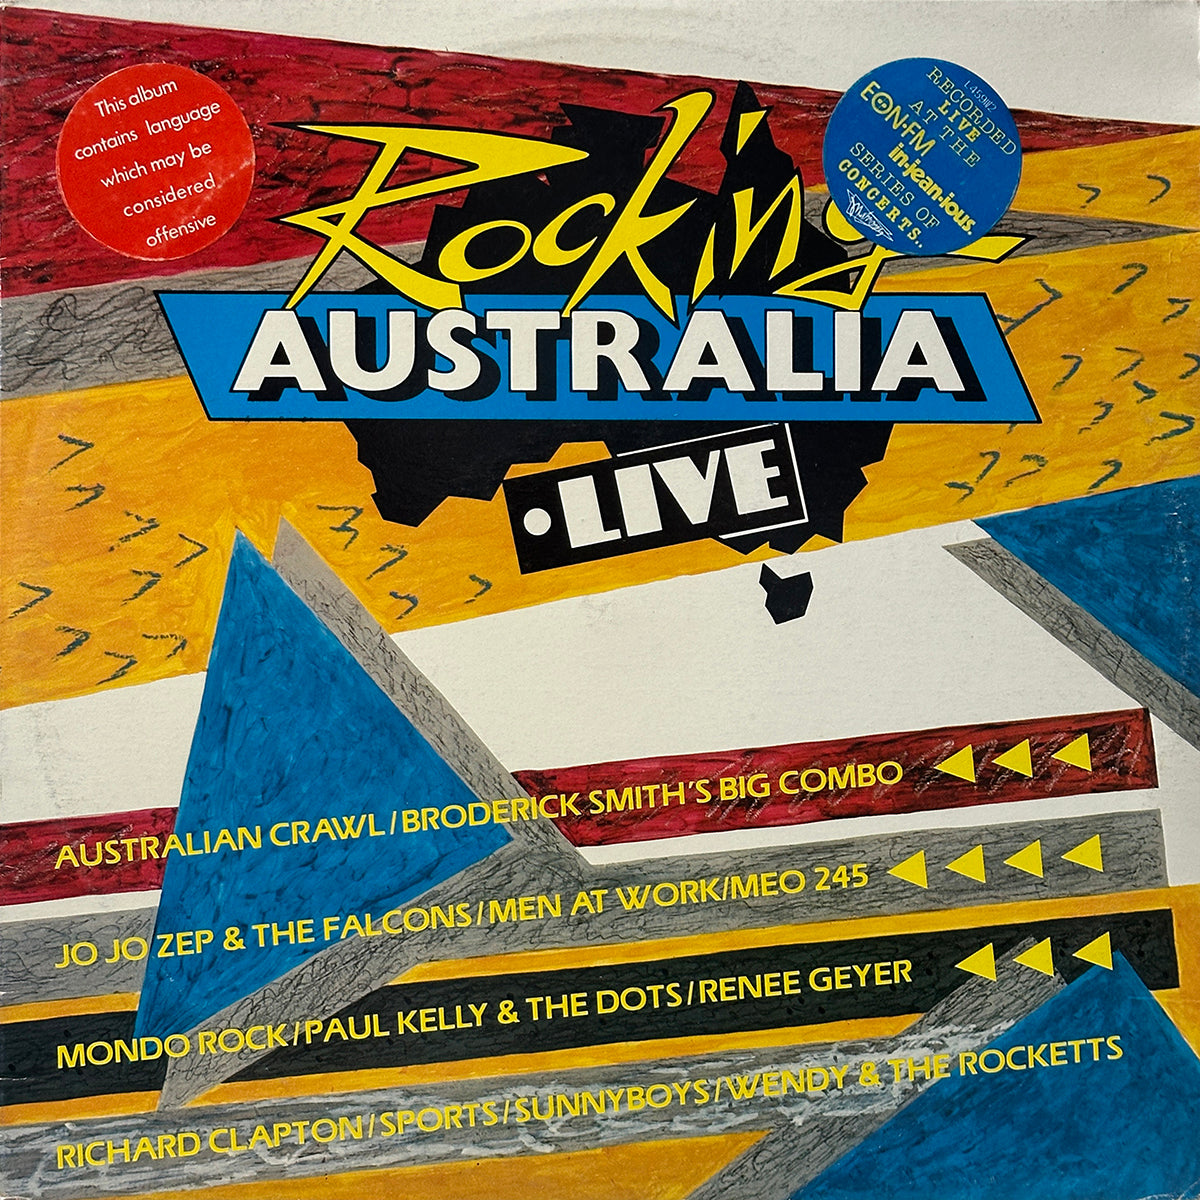 Rocking Australia Live